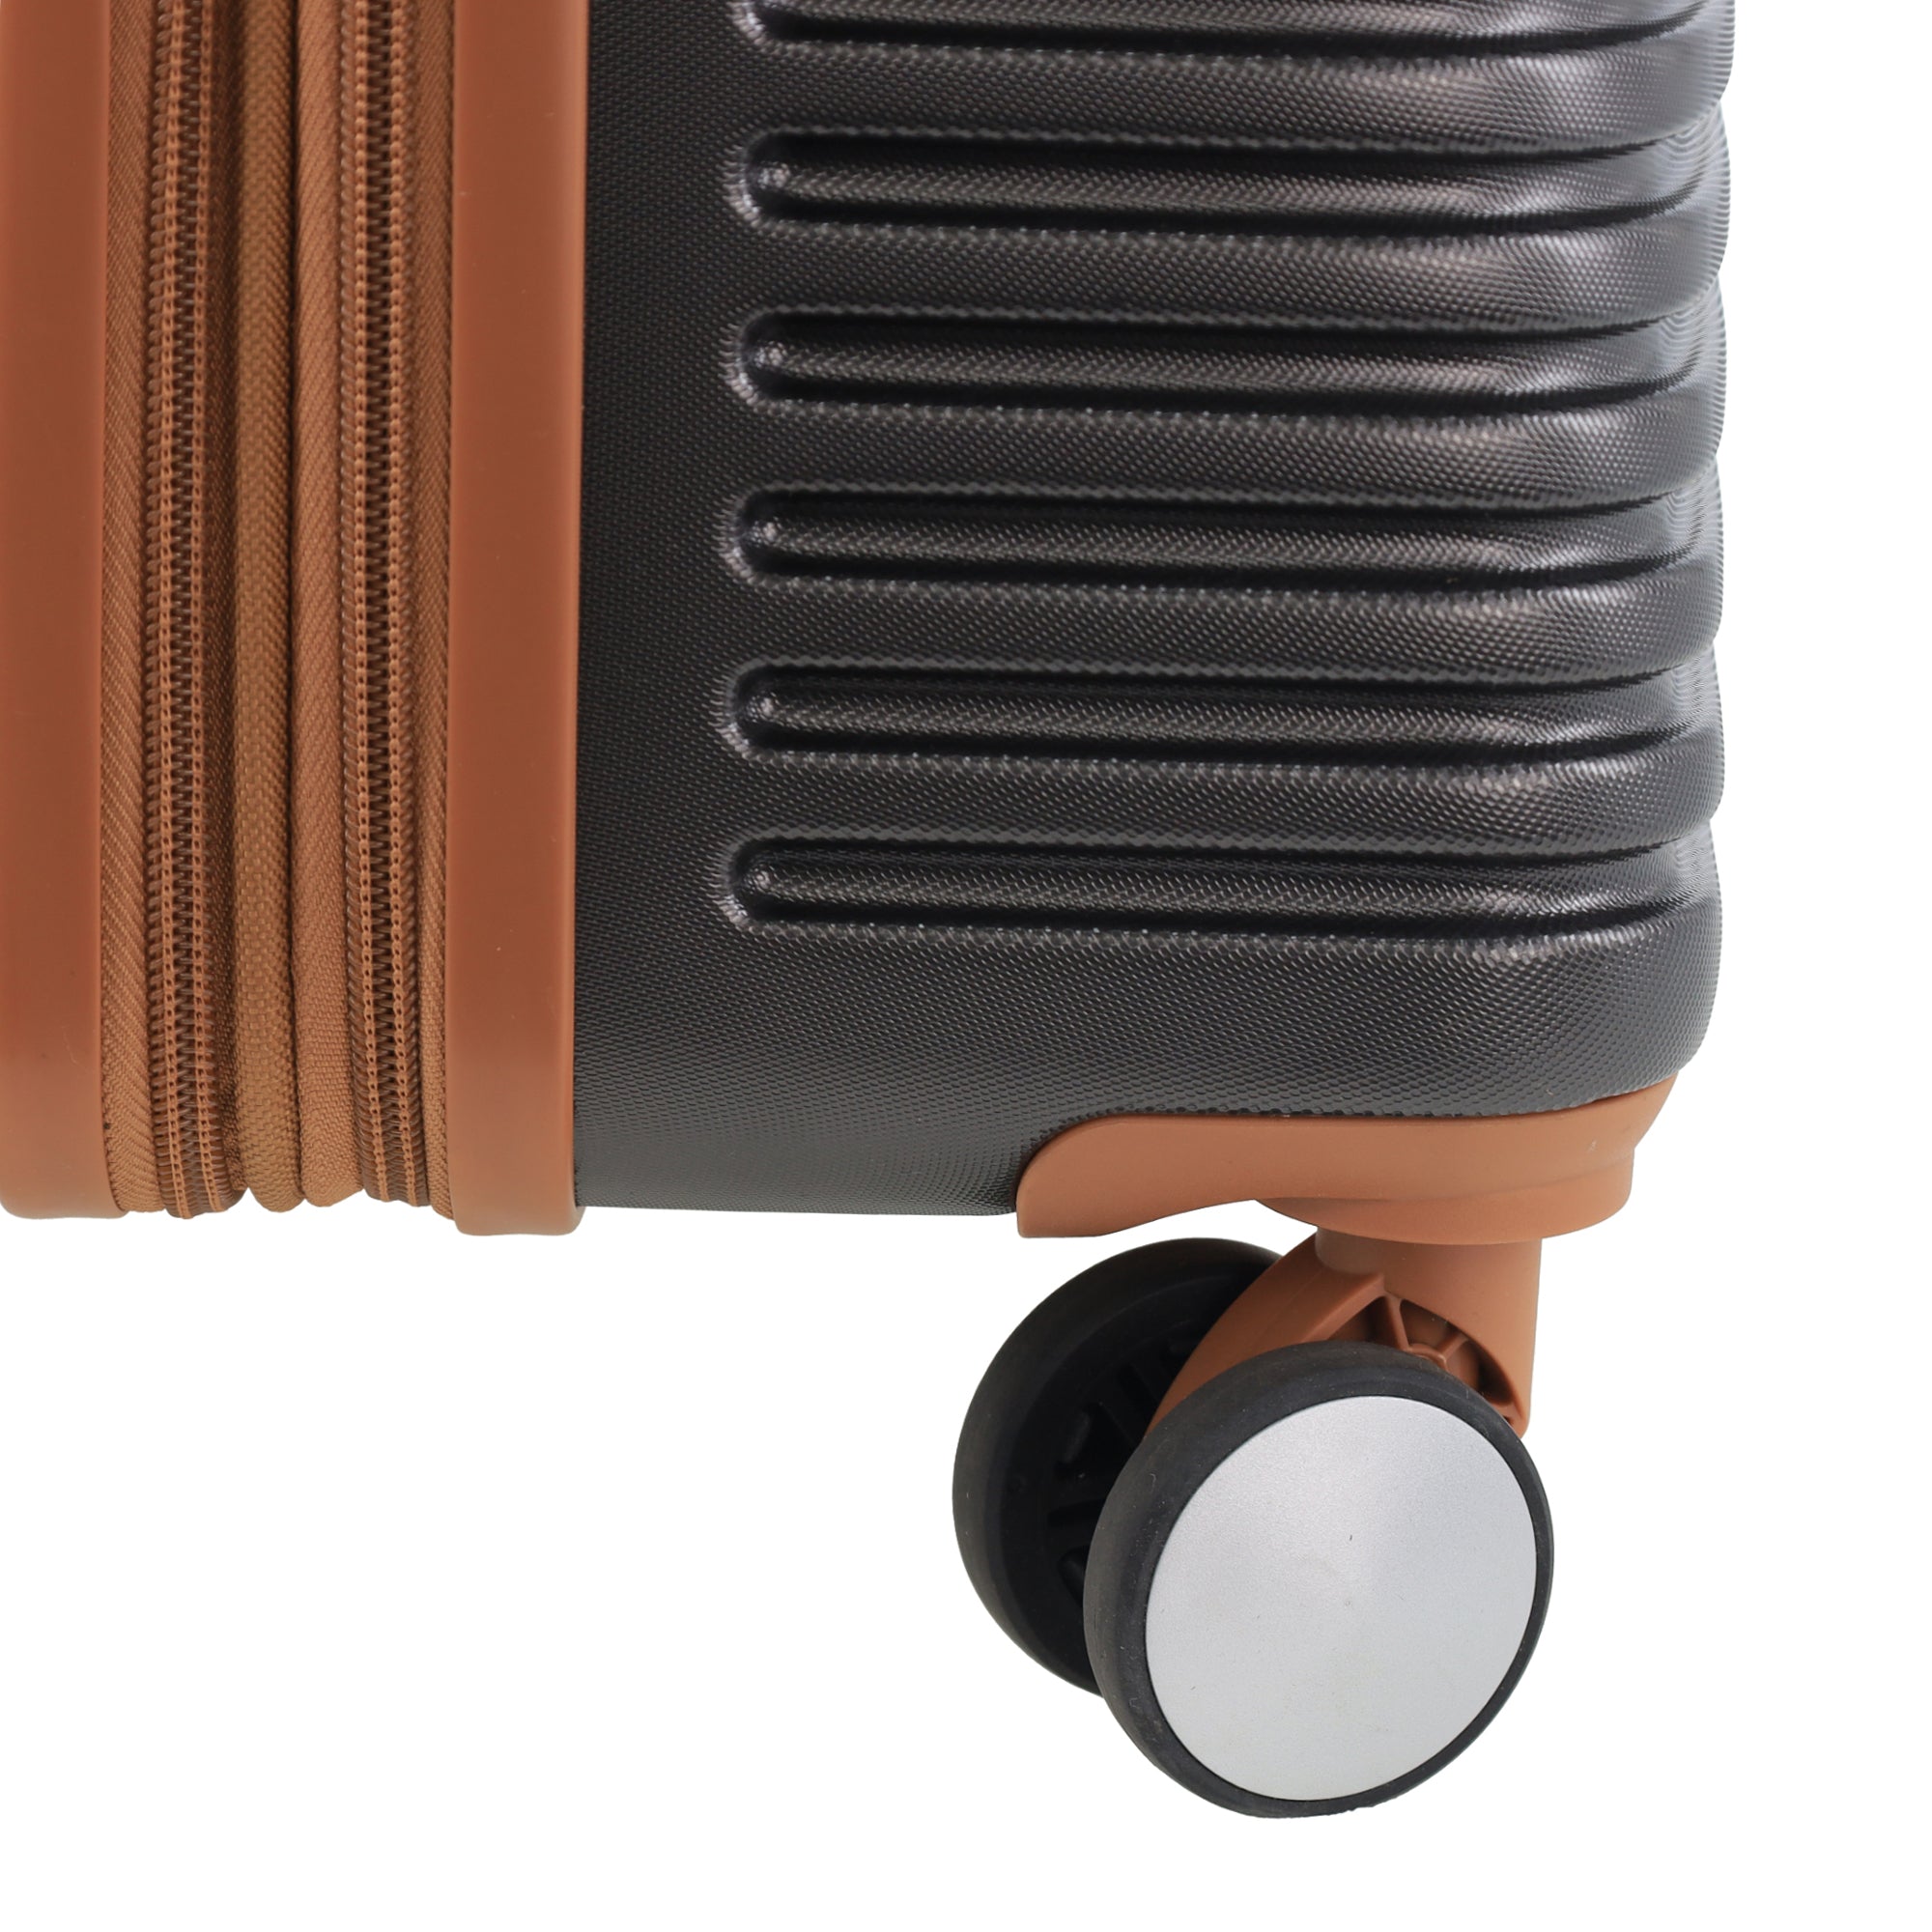 Pierre Cardin 54cm CABIN Hard Shell Suitcase in Charcoal